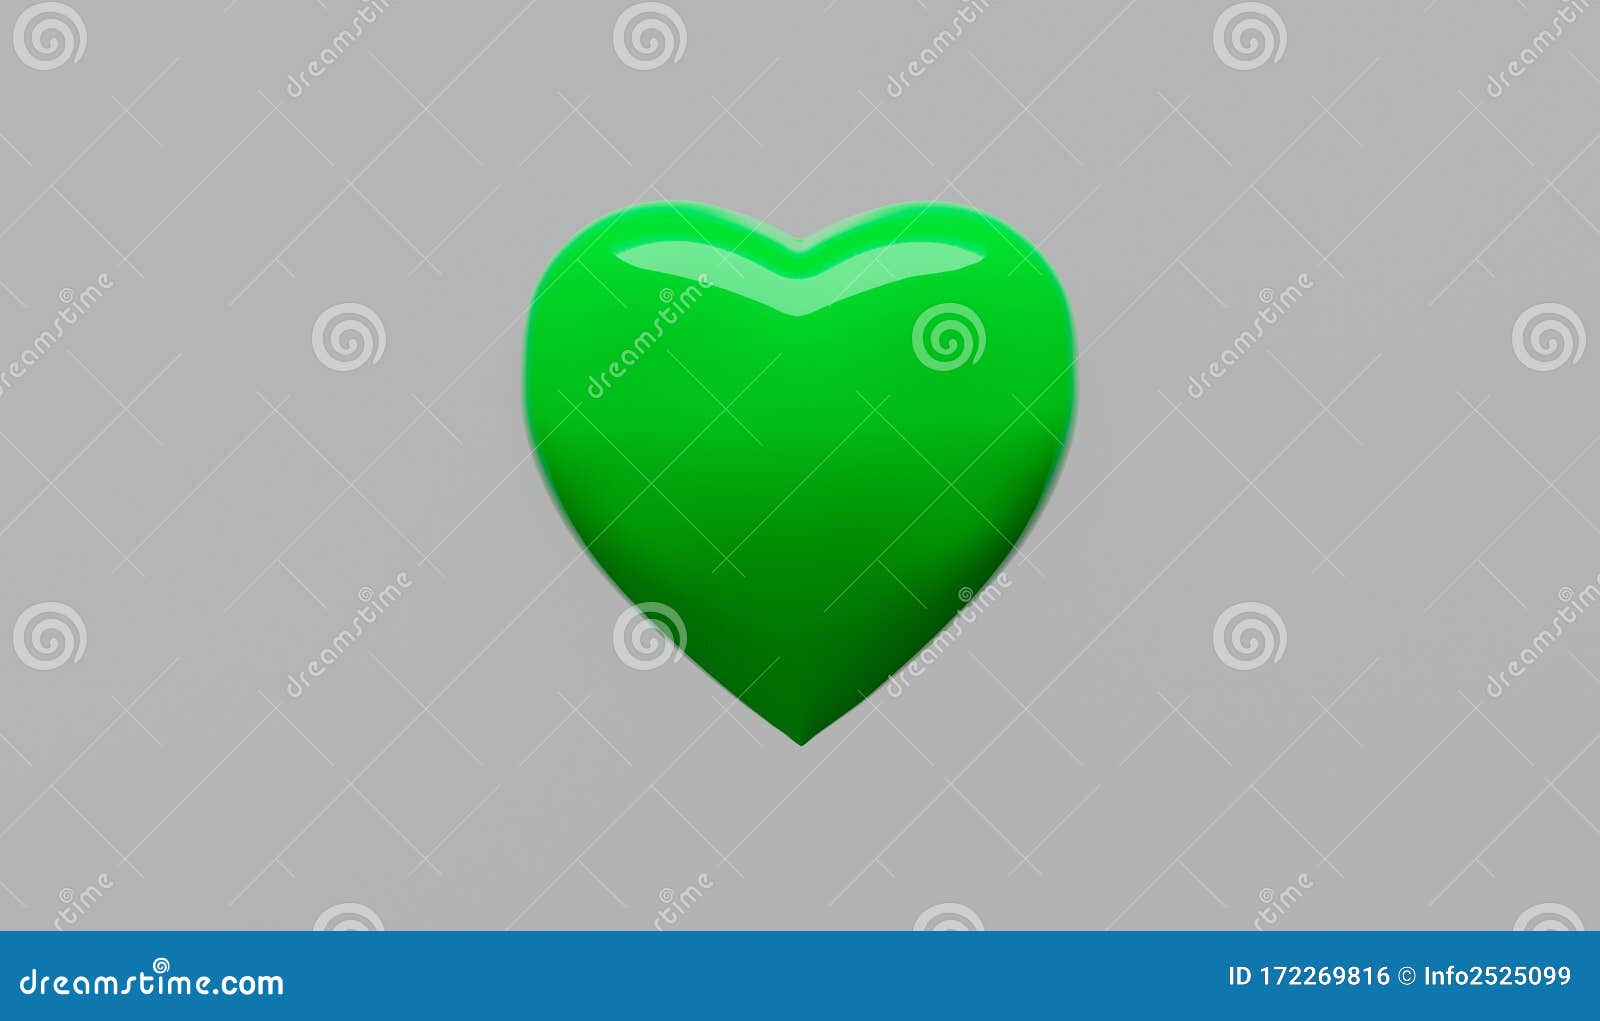 green heart on white background valentine`s day medicinal medicine health beat